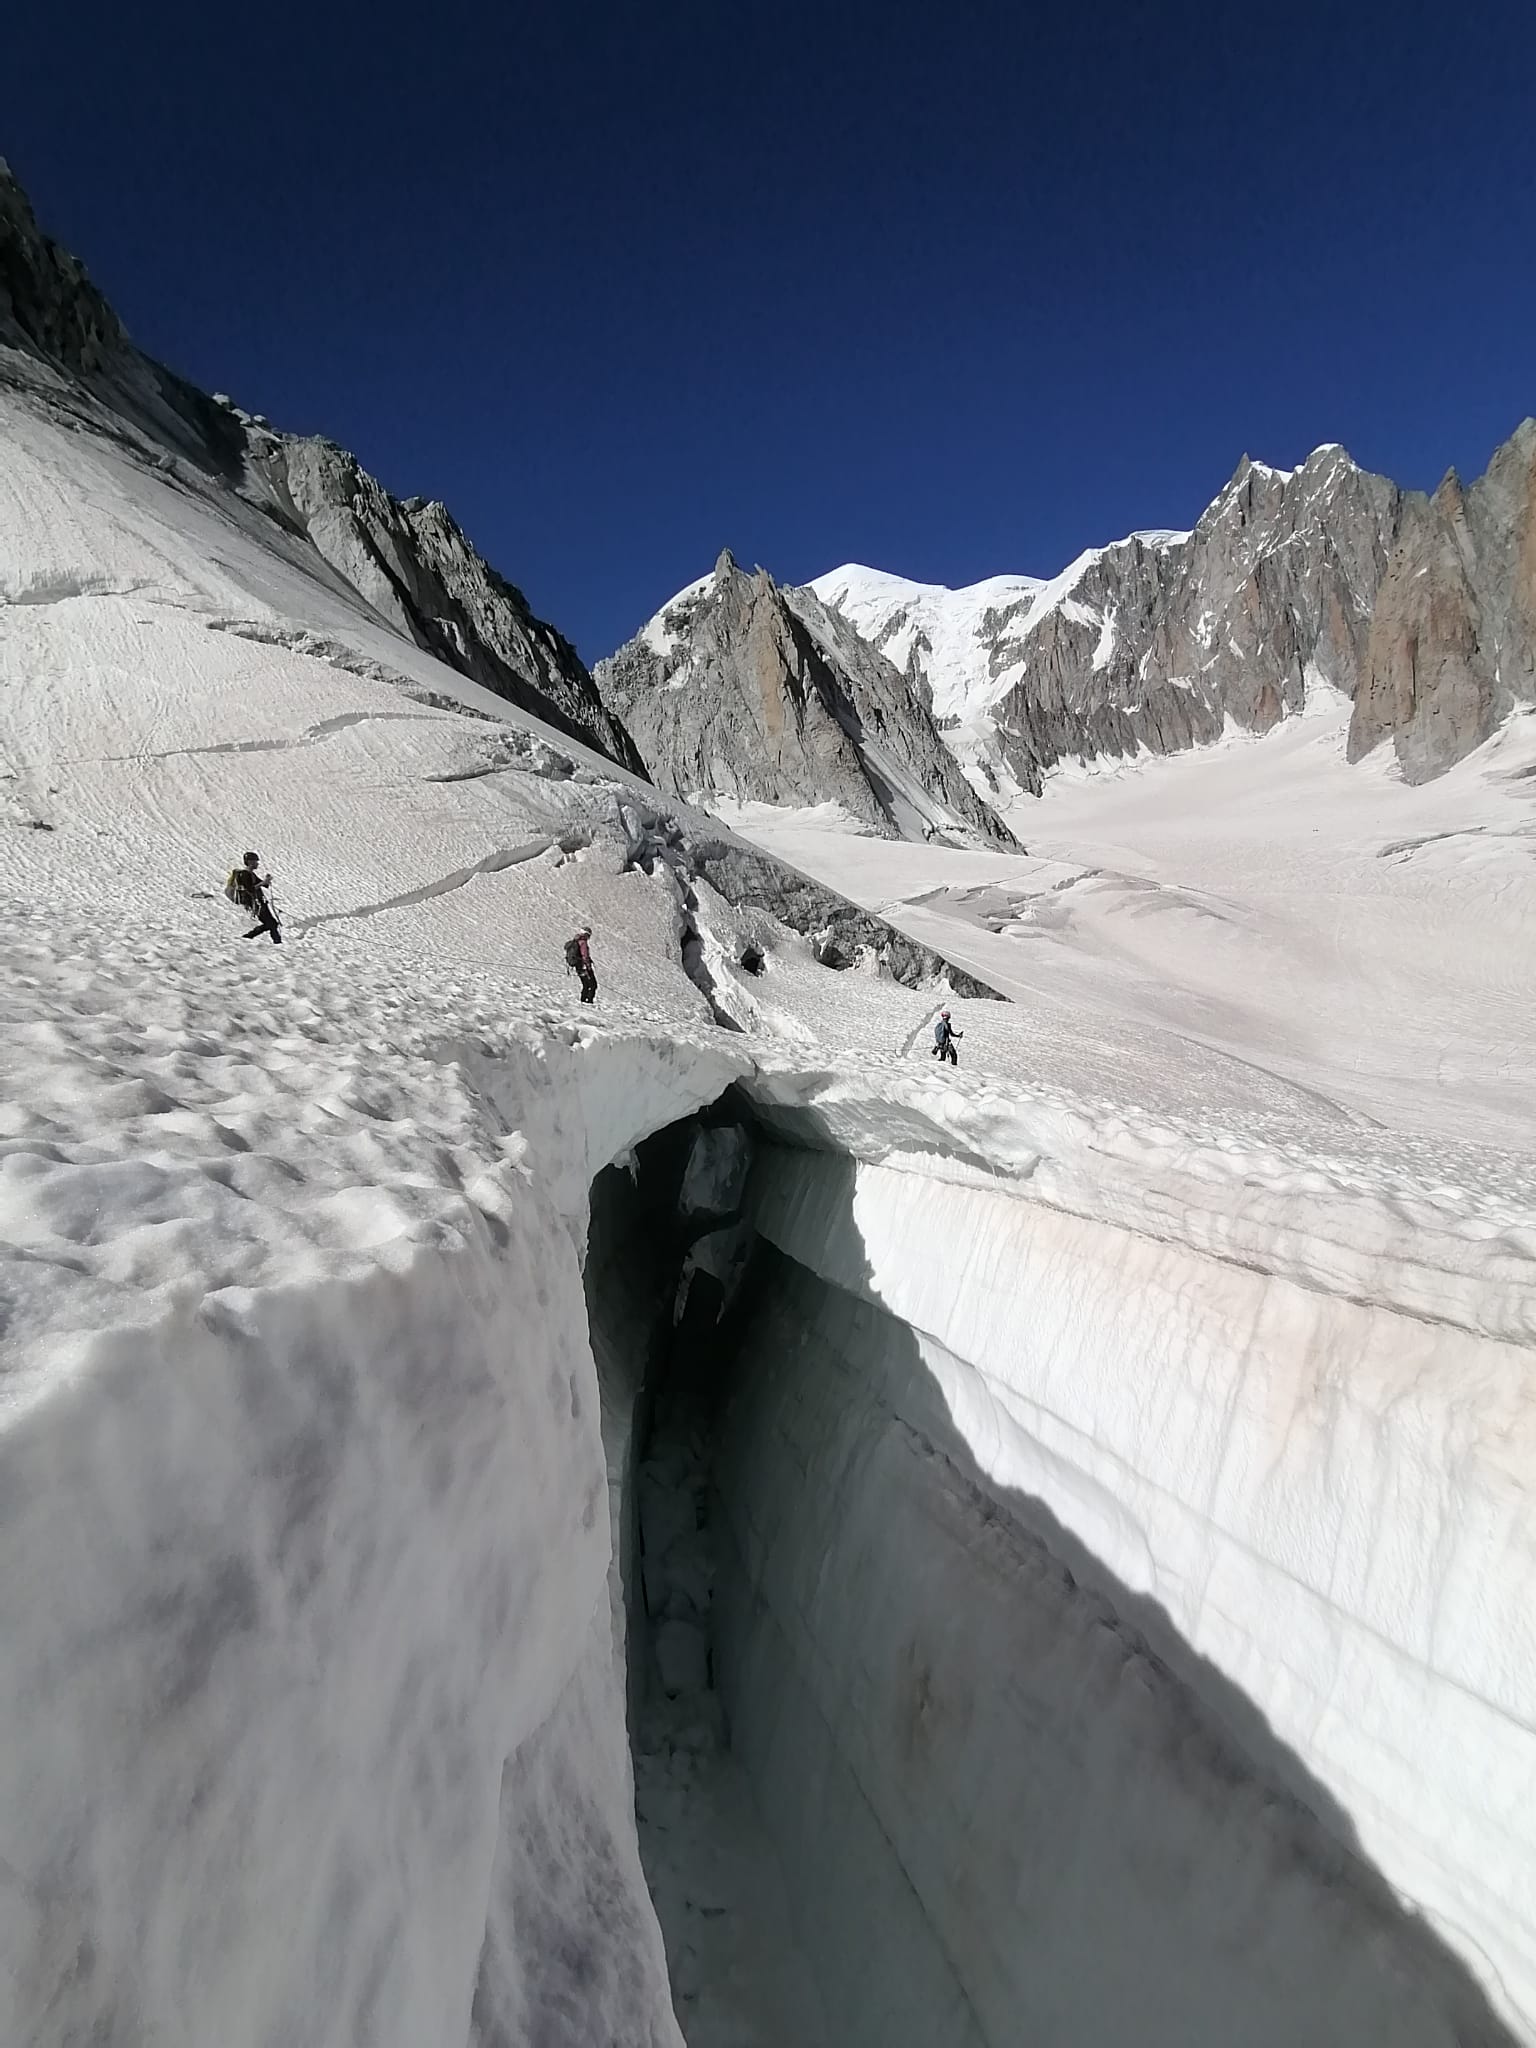 Three climbers cross a precarious snow bridge on the Vallée Blanche